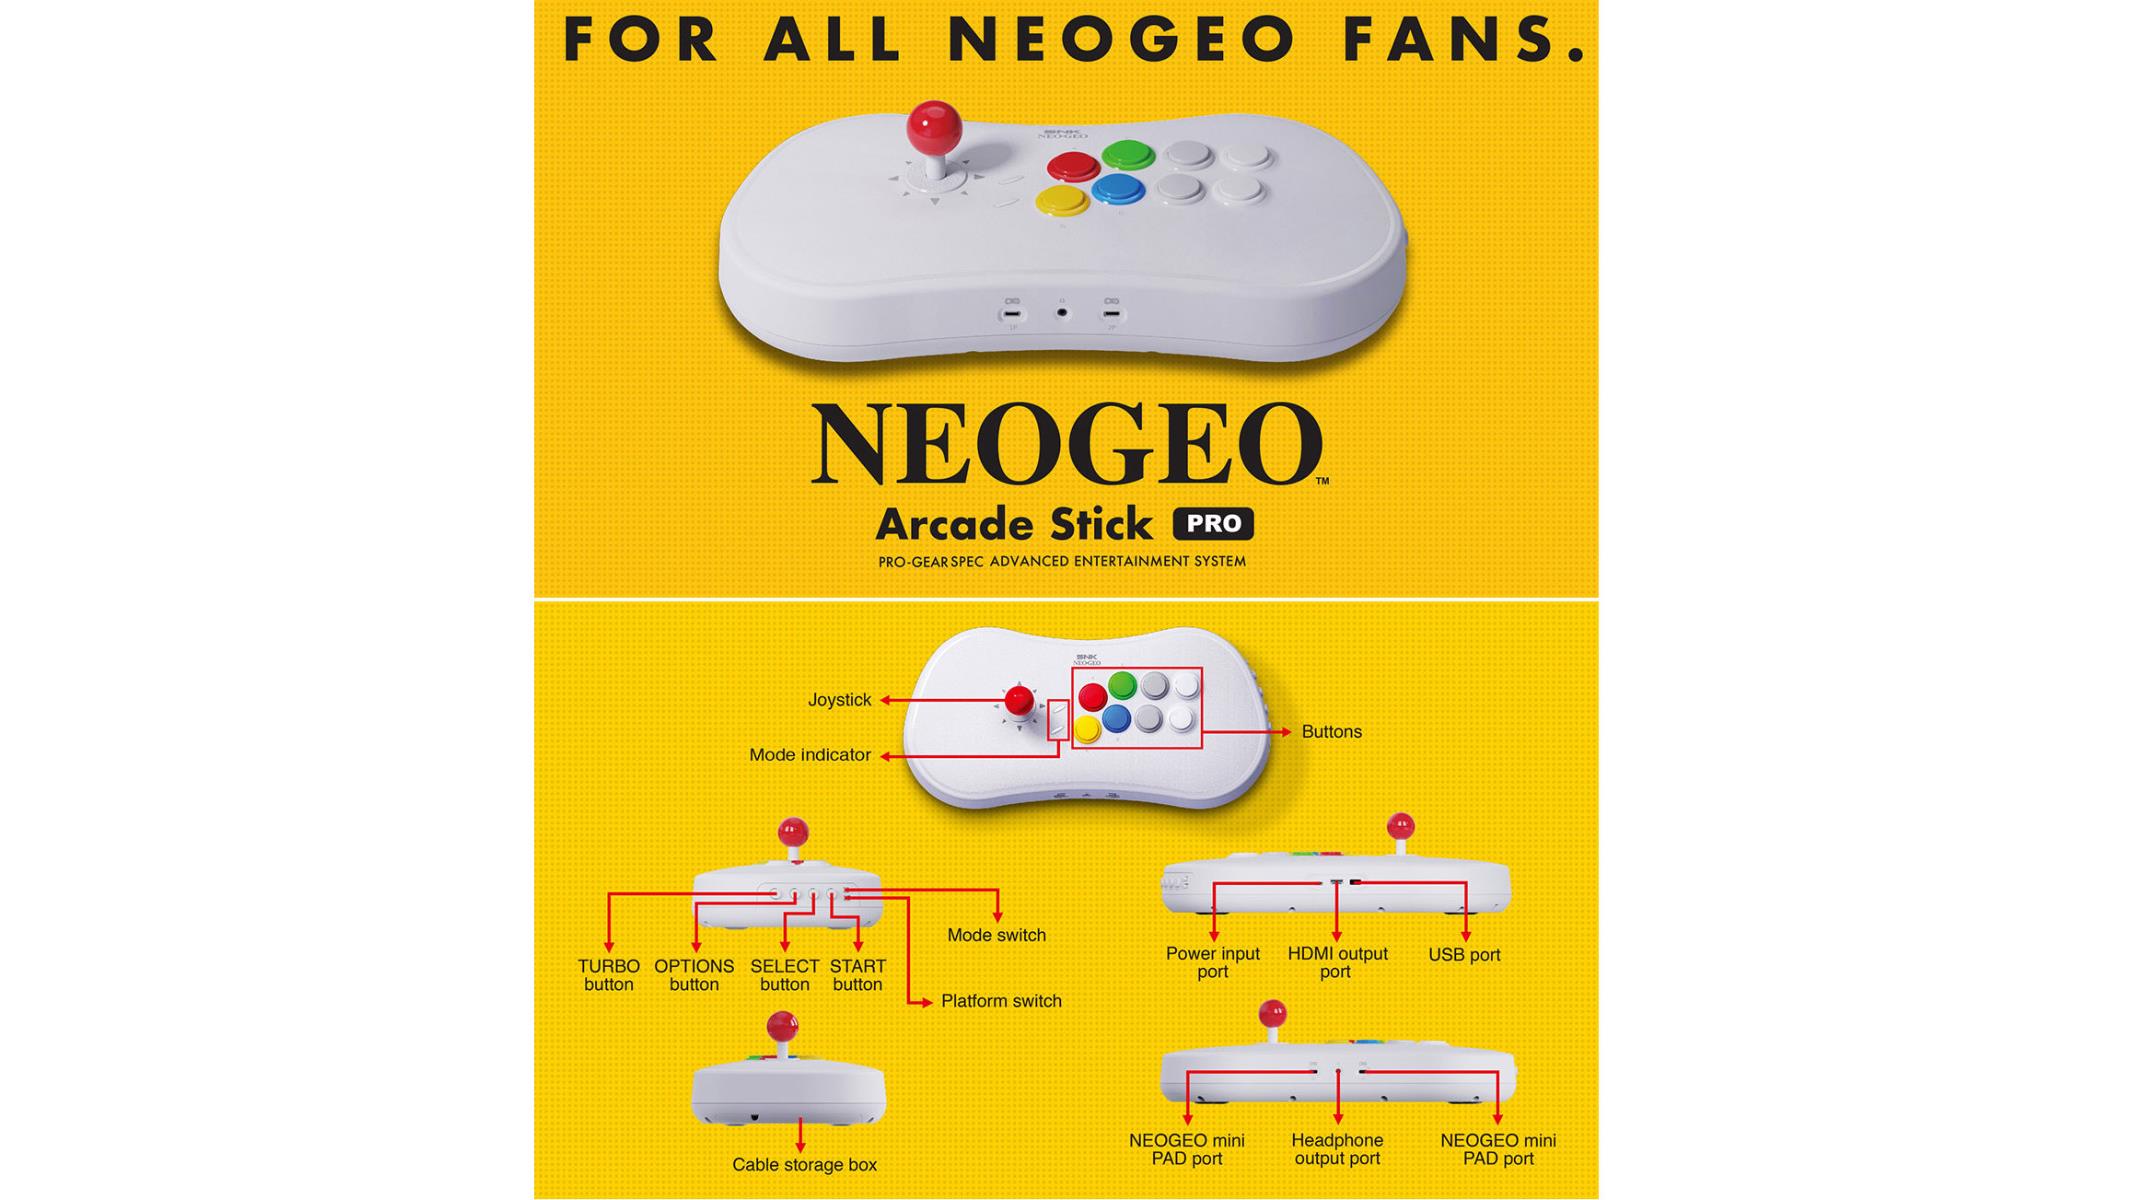 SNK's Neo Geo Arcade Stick Pro Is A Killer Self-Contained Retro